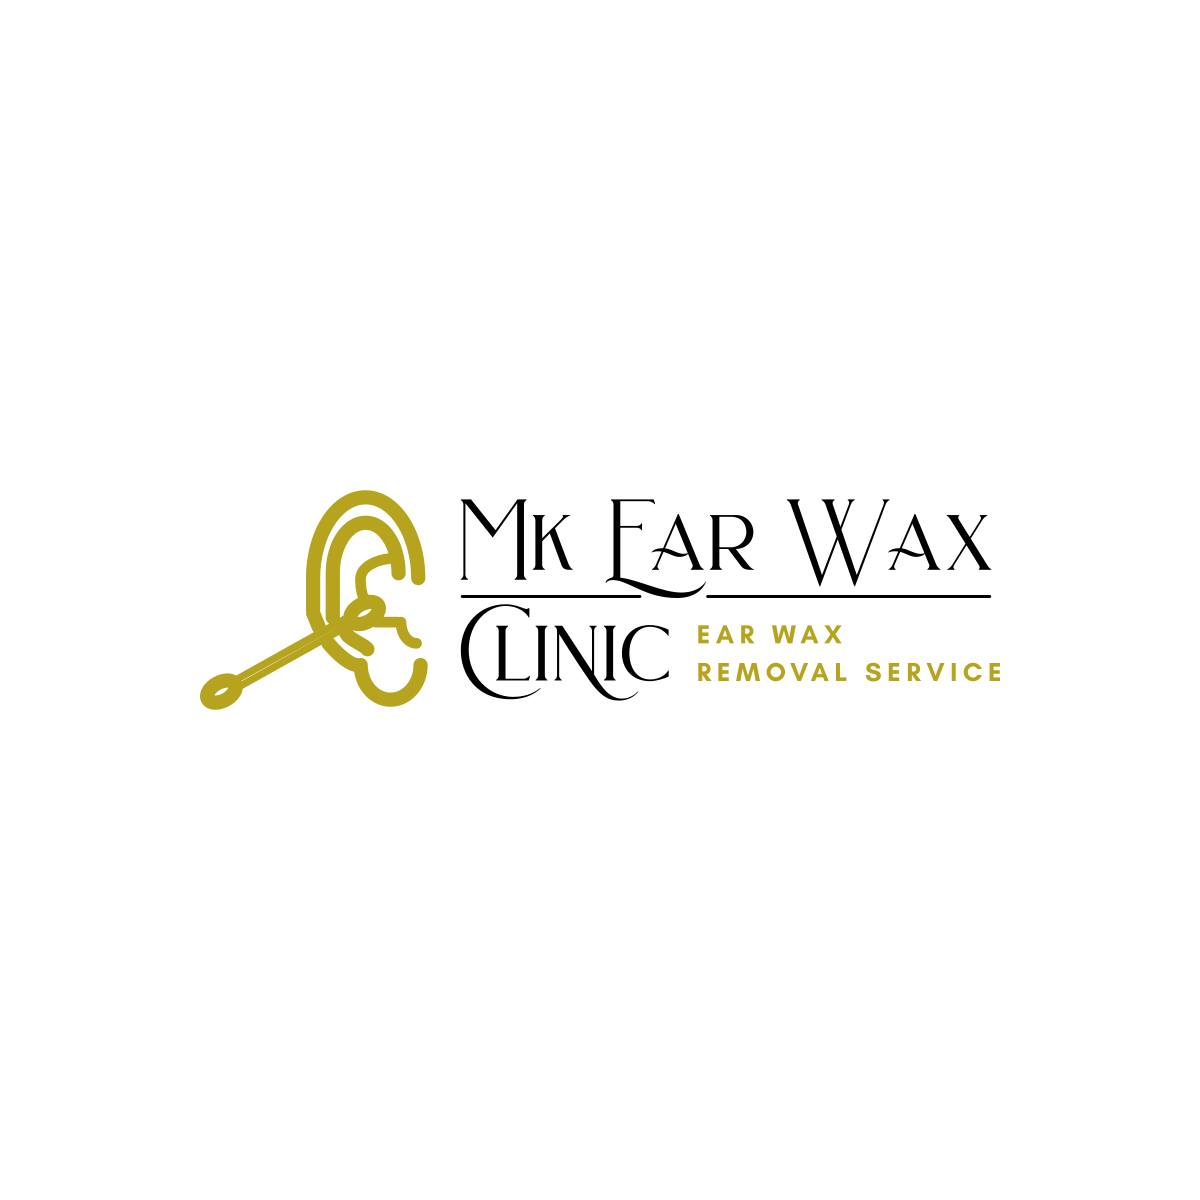 MK Ear Wax Clinic Ltd Logo